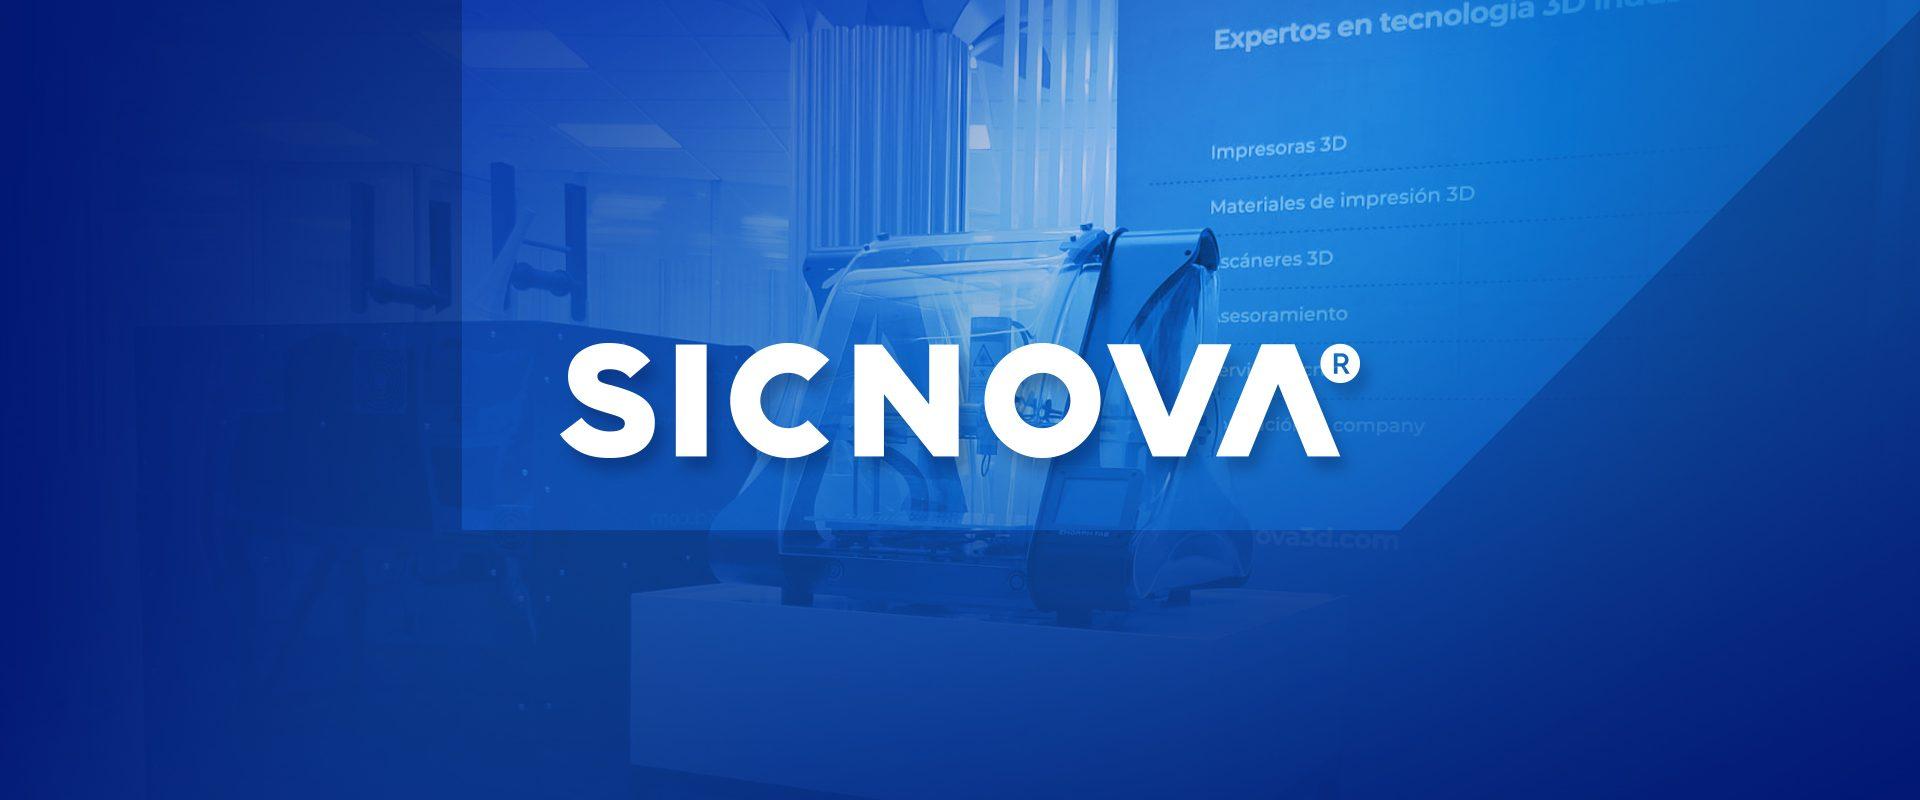 Sicnova logo